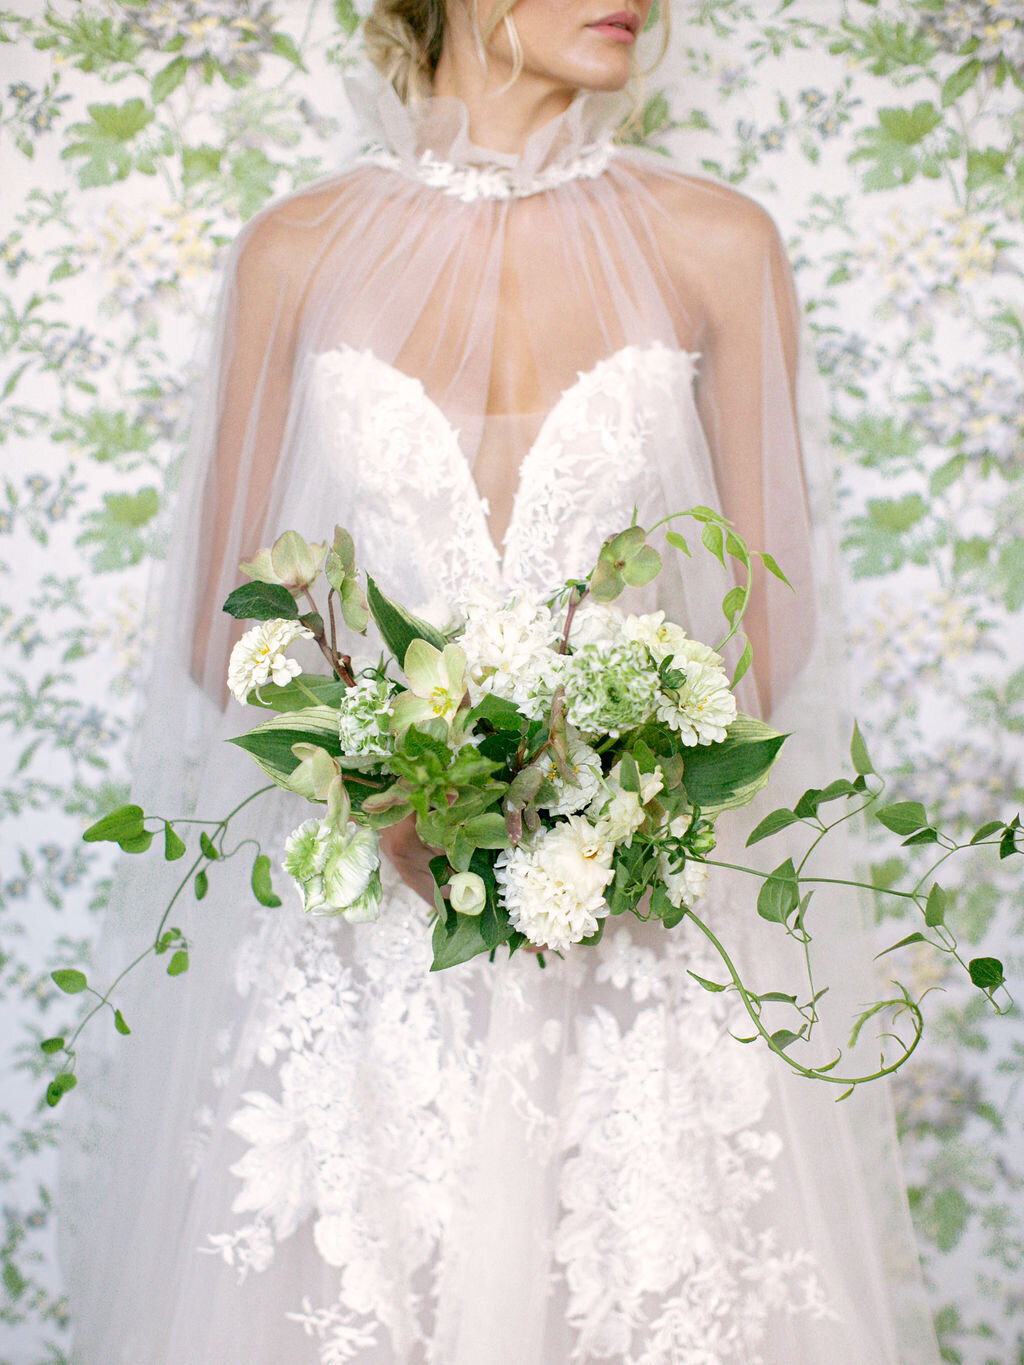 max-owens-design-english-floral-wedding-17-white-green-bouquet